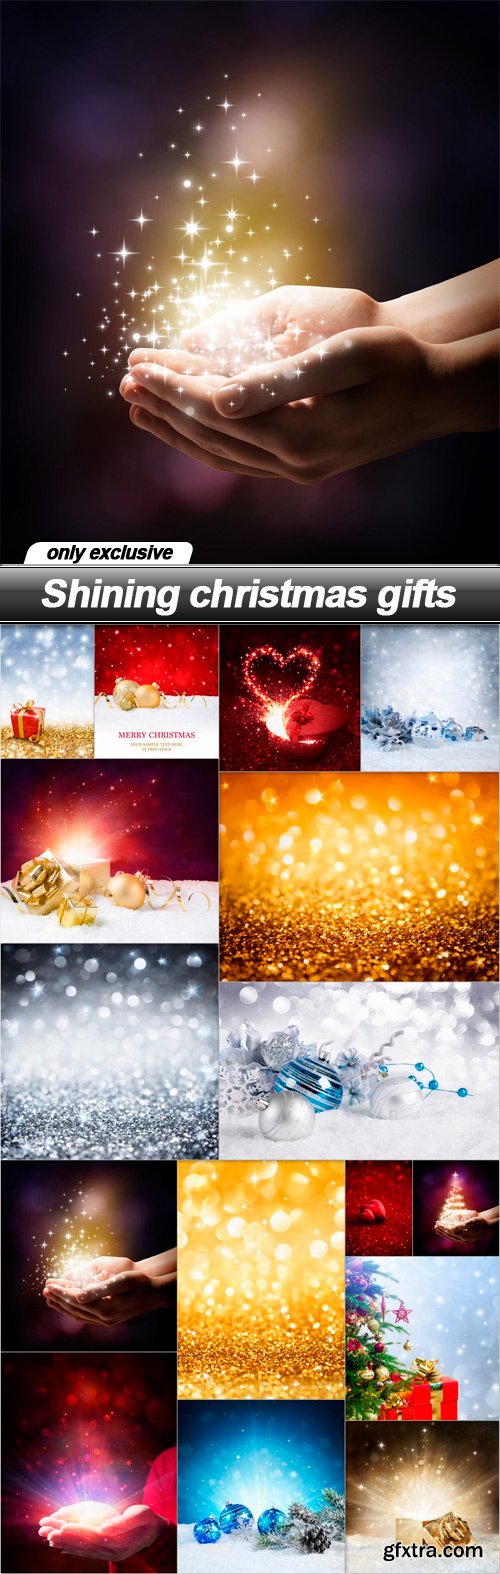 Shining christmas gifts - 16 UHQ JPEG